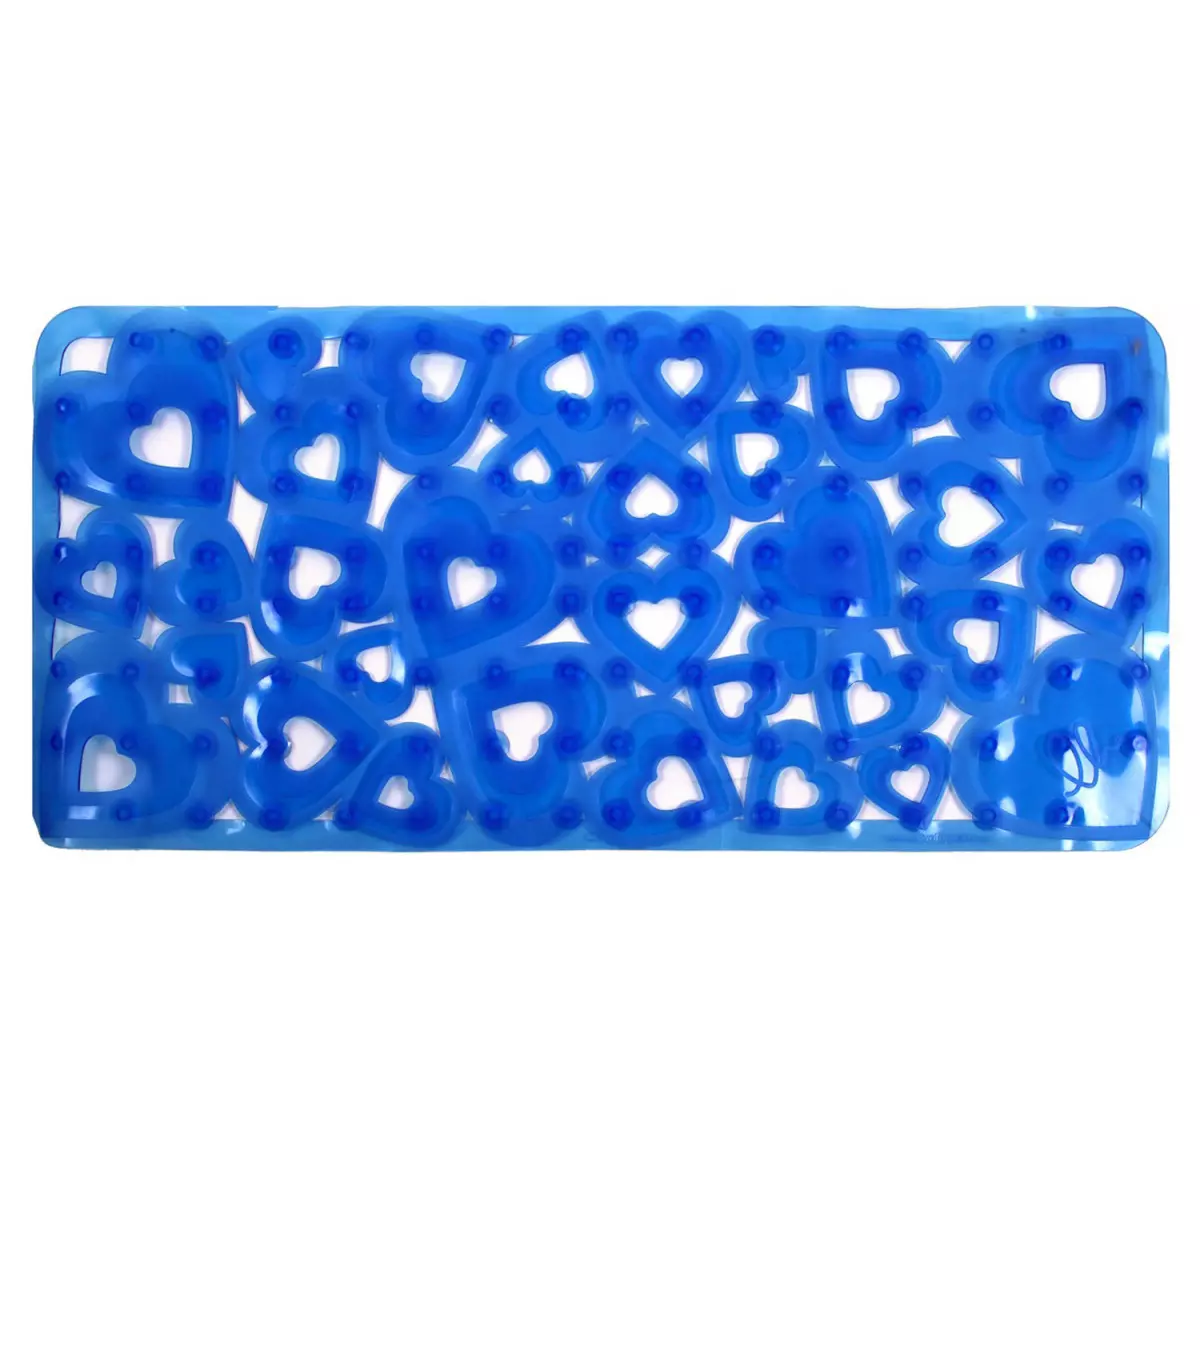 Rectangular rubber tub shower mat with blue heart suckers